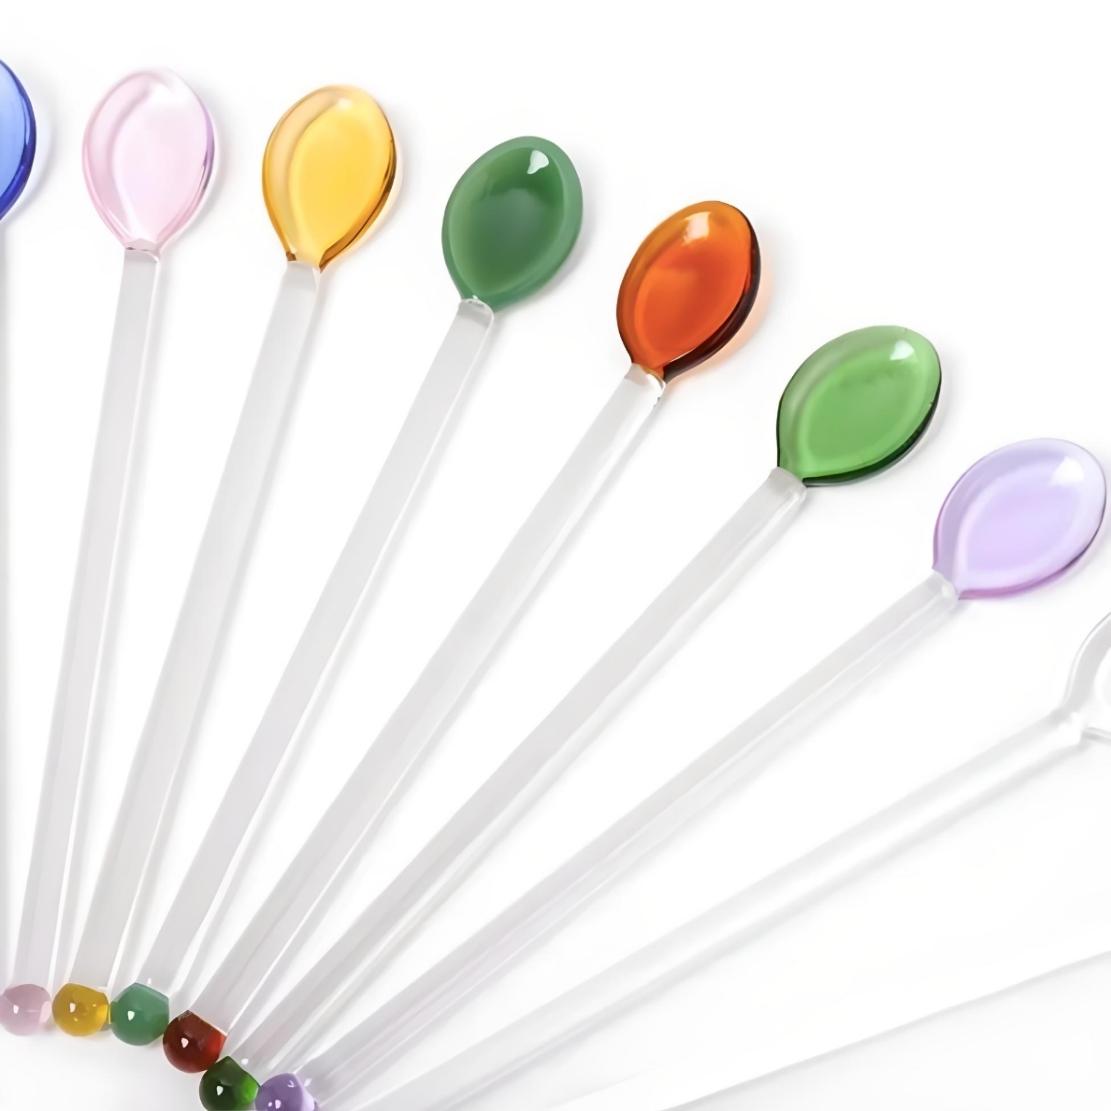 Colourful glass lollipop spoons